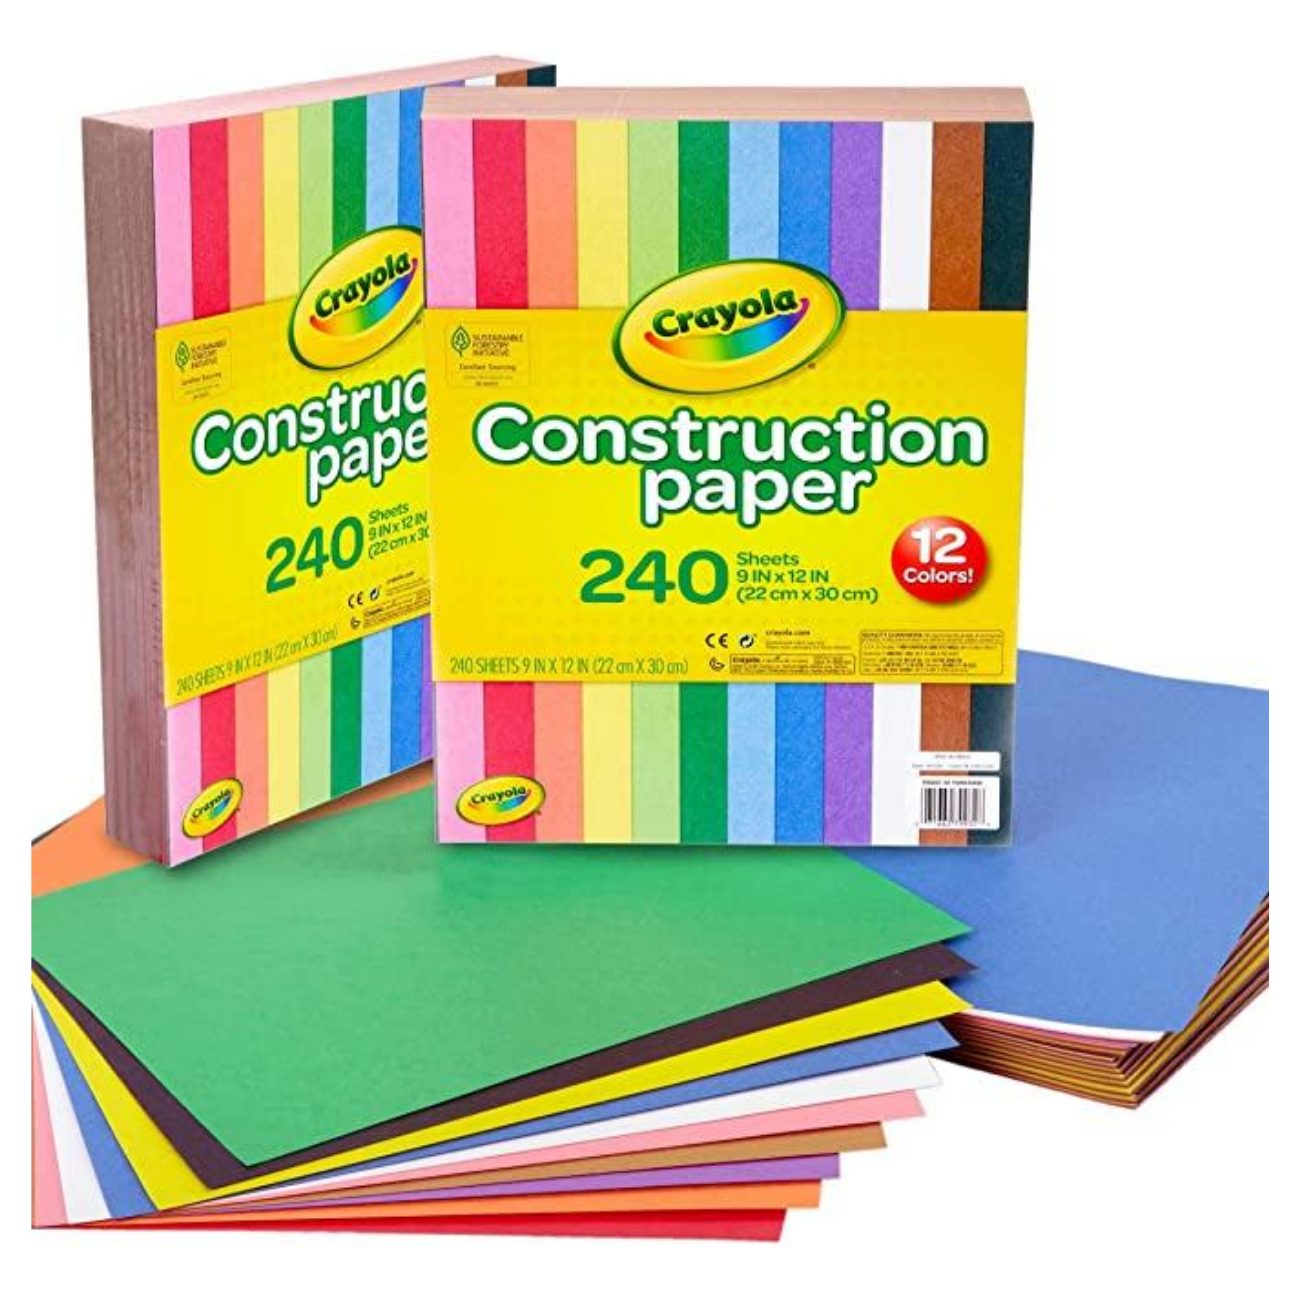 Construction Paper, 96 Count School Supplies, Crayola.com